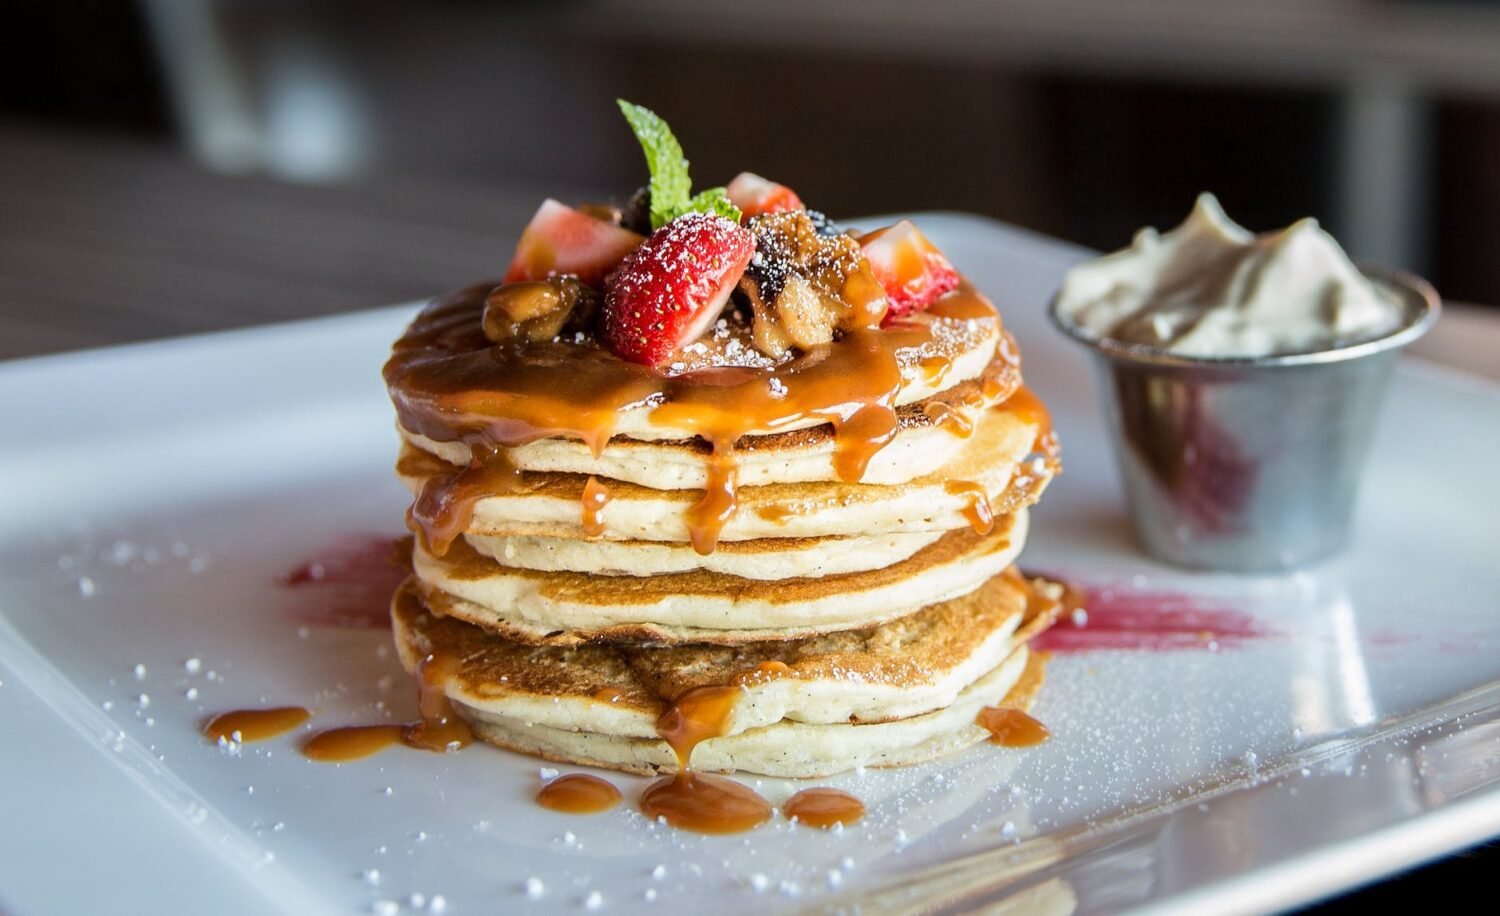 International House of Pancakes: 10 Best Breakfast Spots For Pancake Lovers